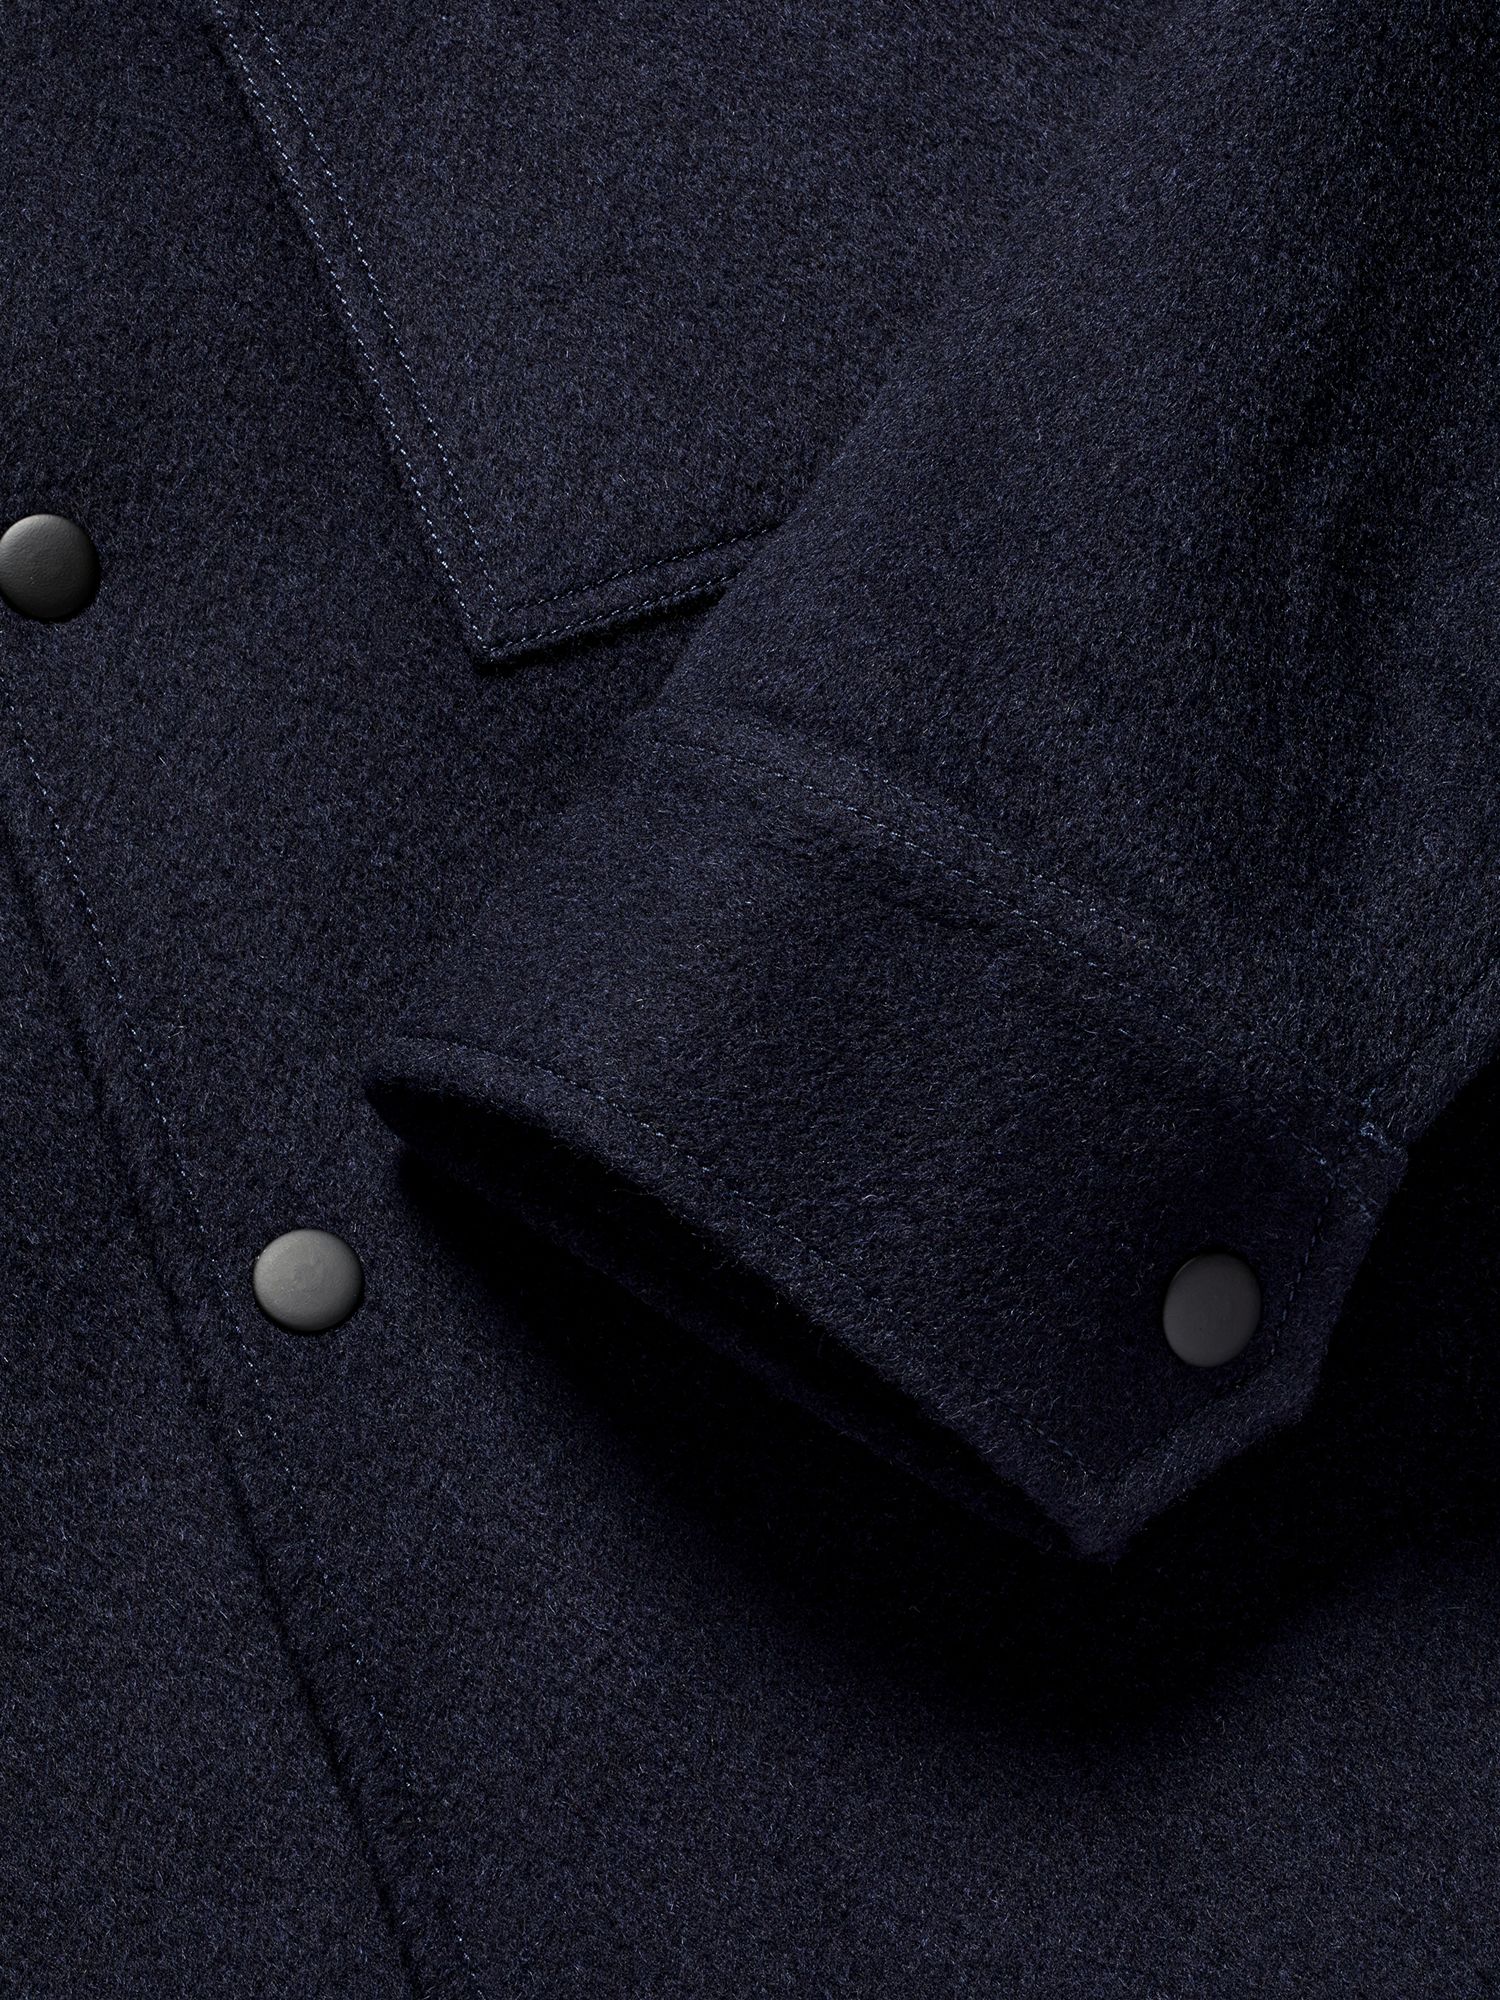 Charles Tyrwhitt Pure Wool Harrington Jacket, Navy, L